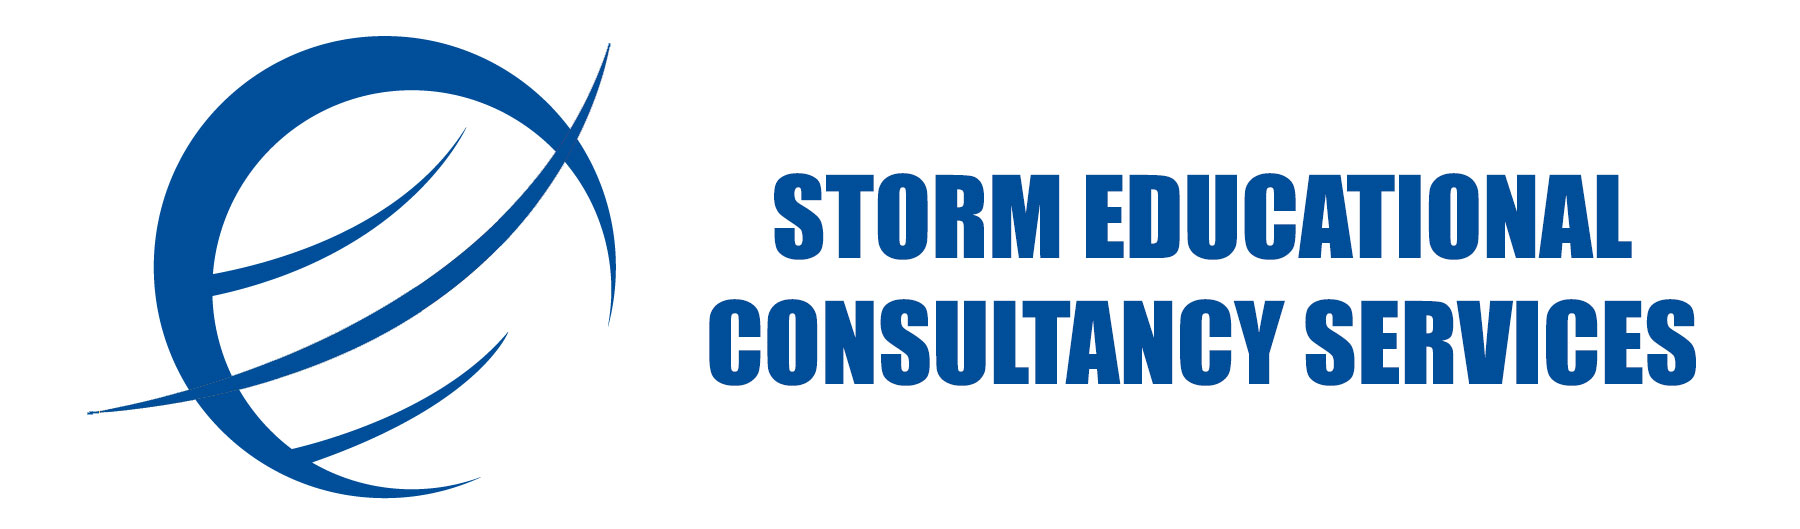 Stormnepal Consultancy